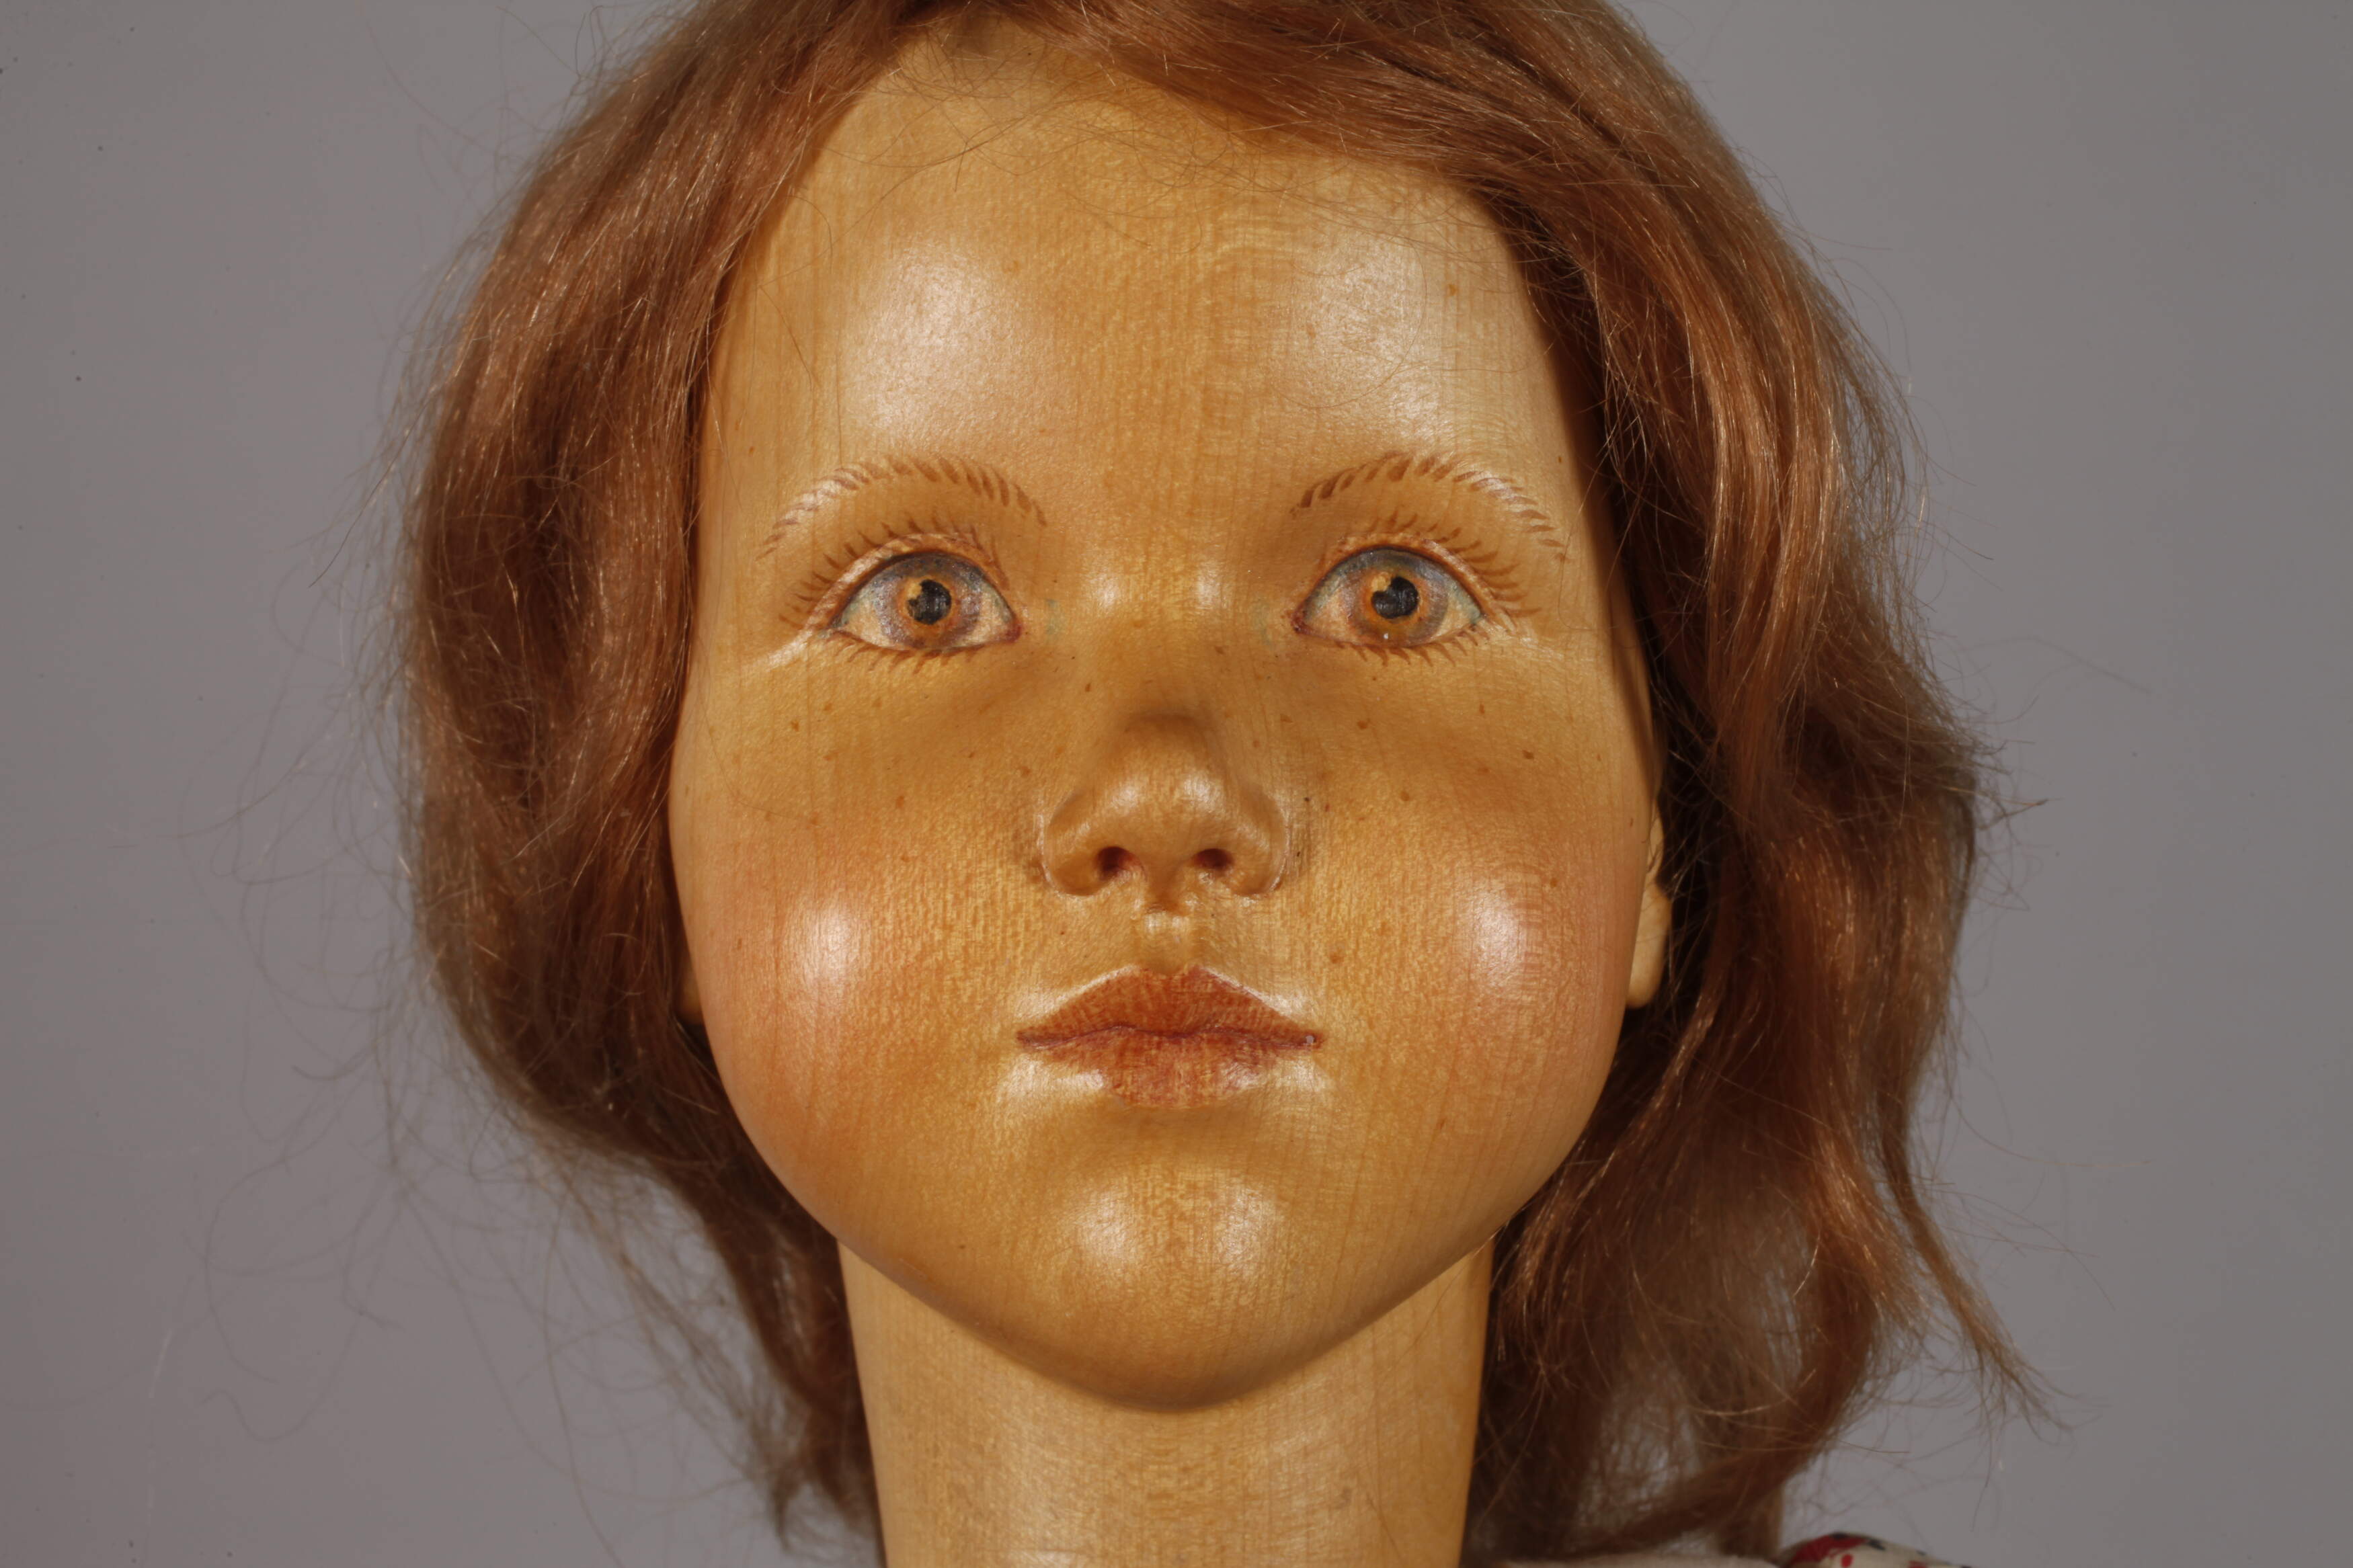 Regina Sandreuter wooden doll "Fiona" - Image 2 of 3